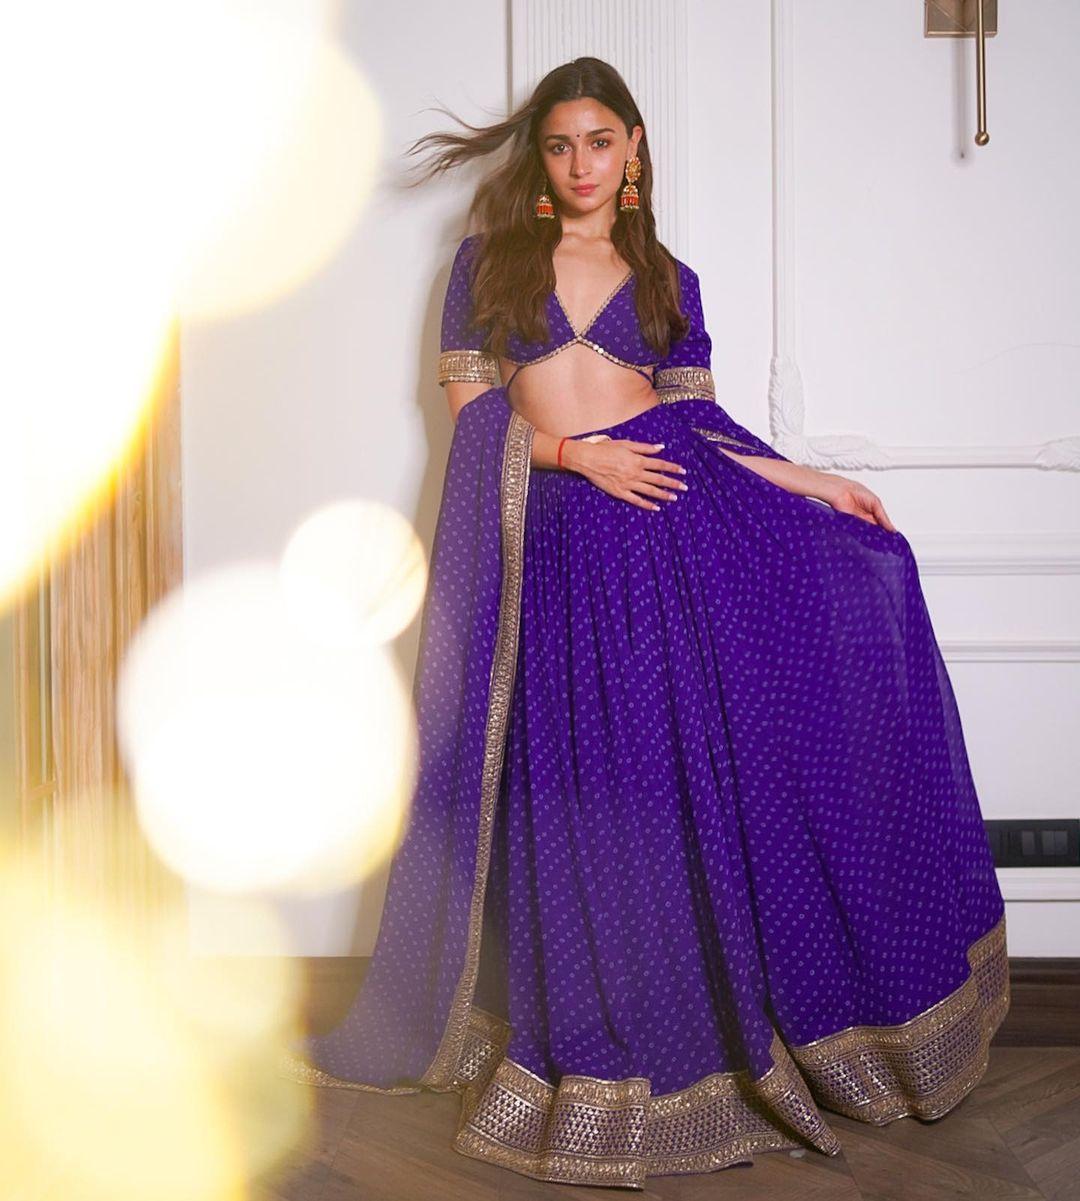 Kanika Kapoor looks ravishing in a Manish Malhotra sequin saree